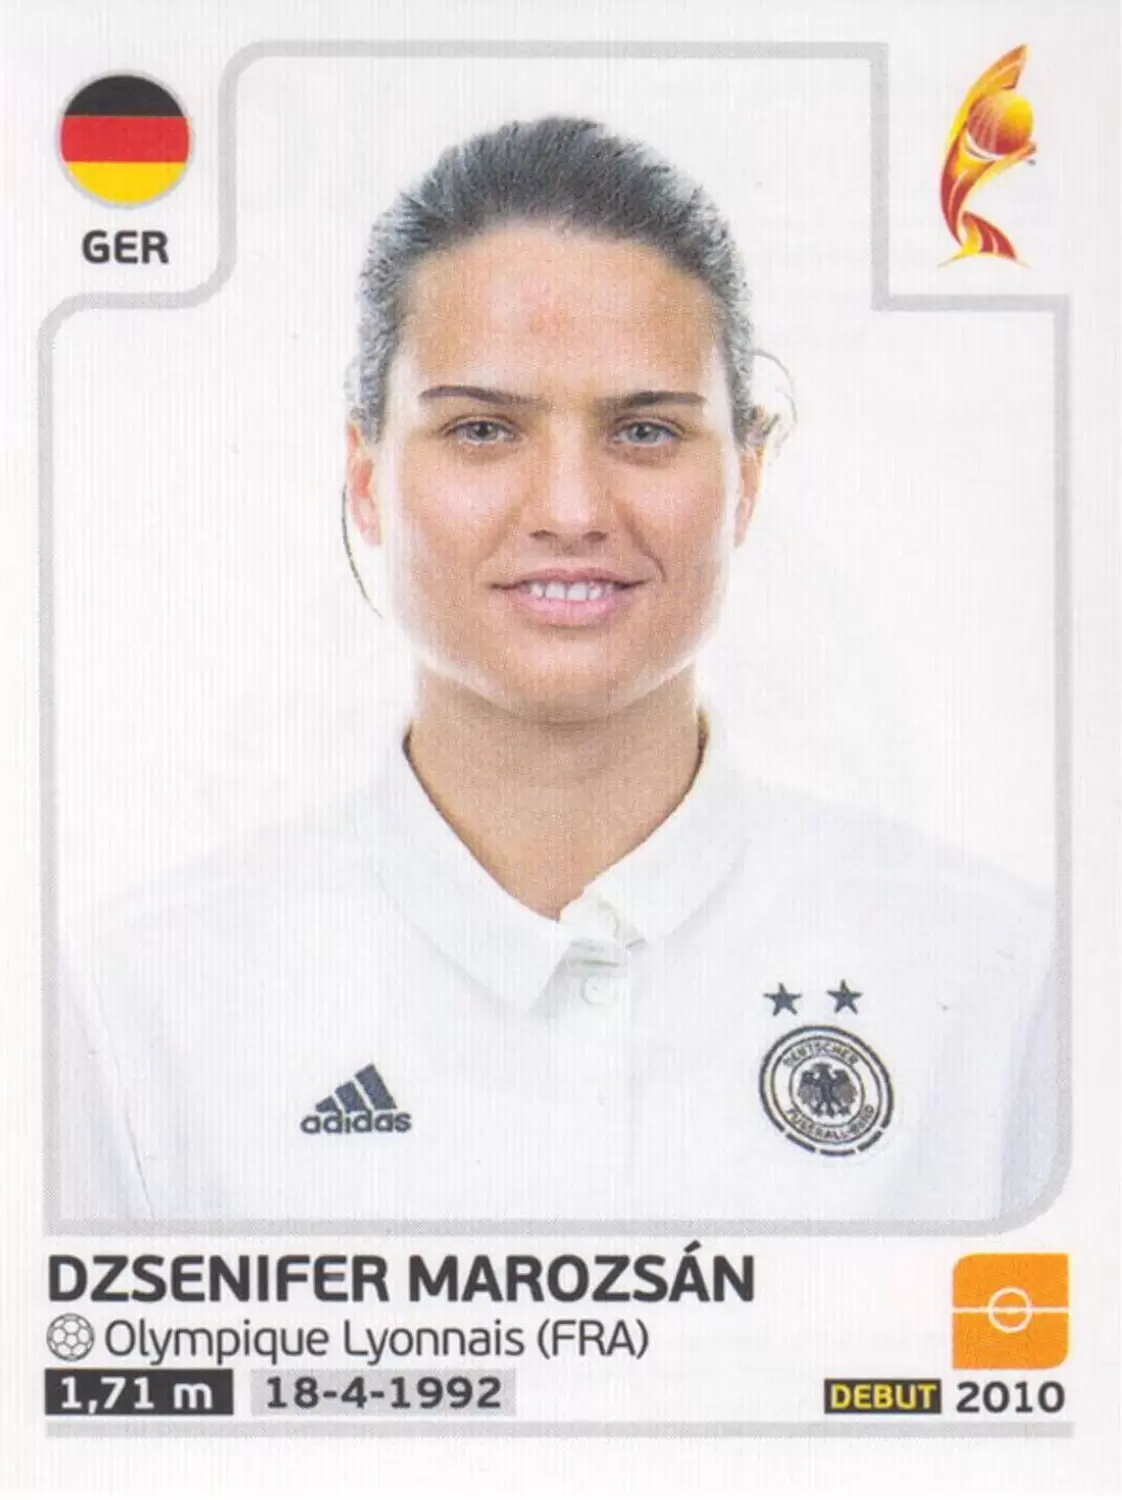 Women\'s Euro 2017 The Netherlands - Dzsenifer Marozsán - Germany